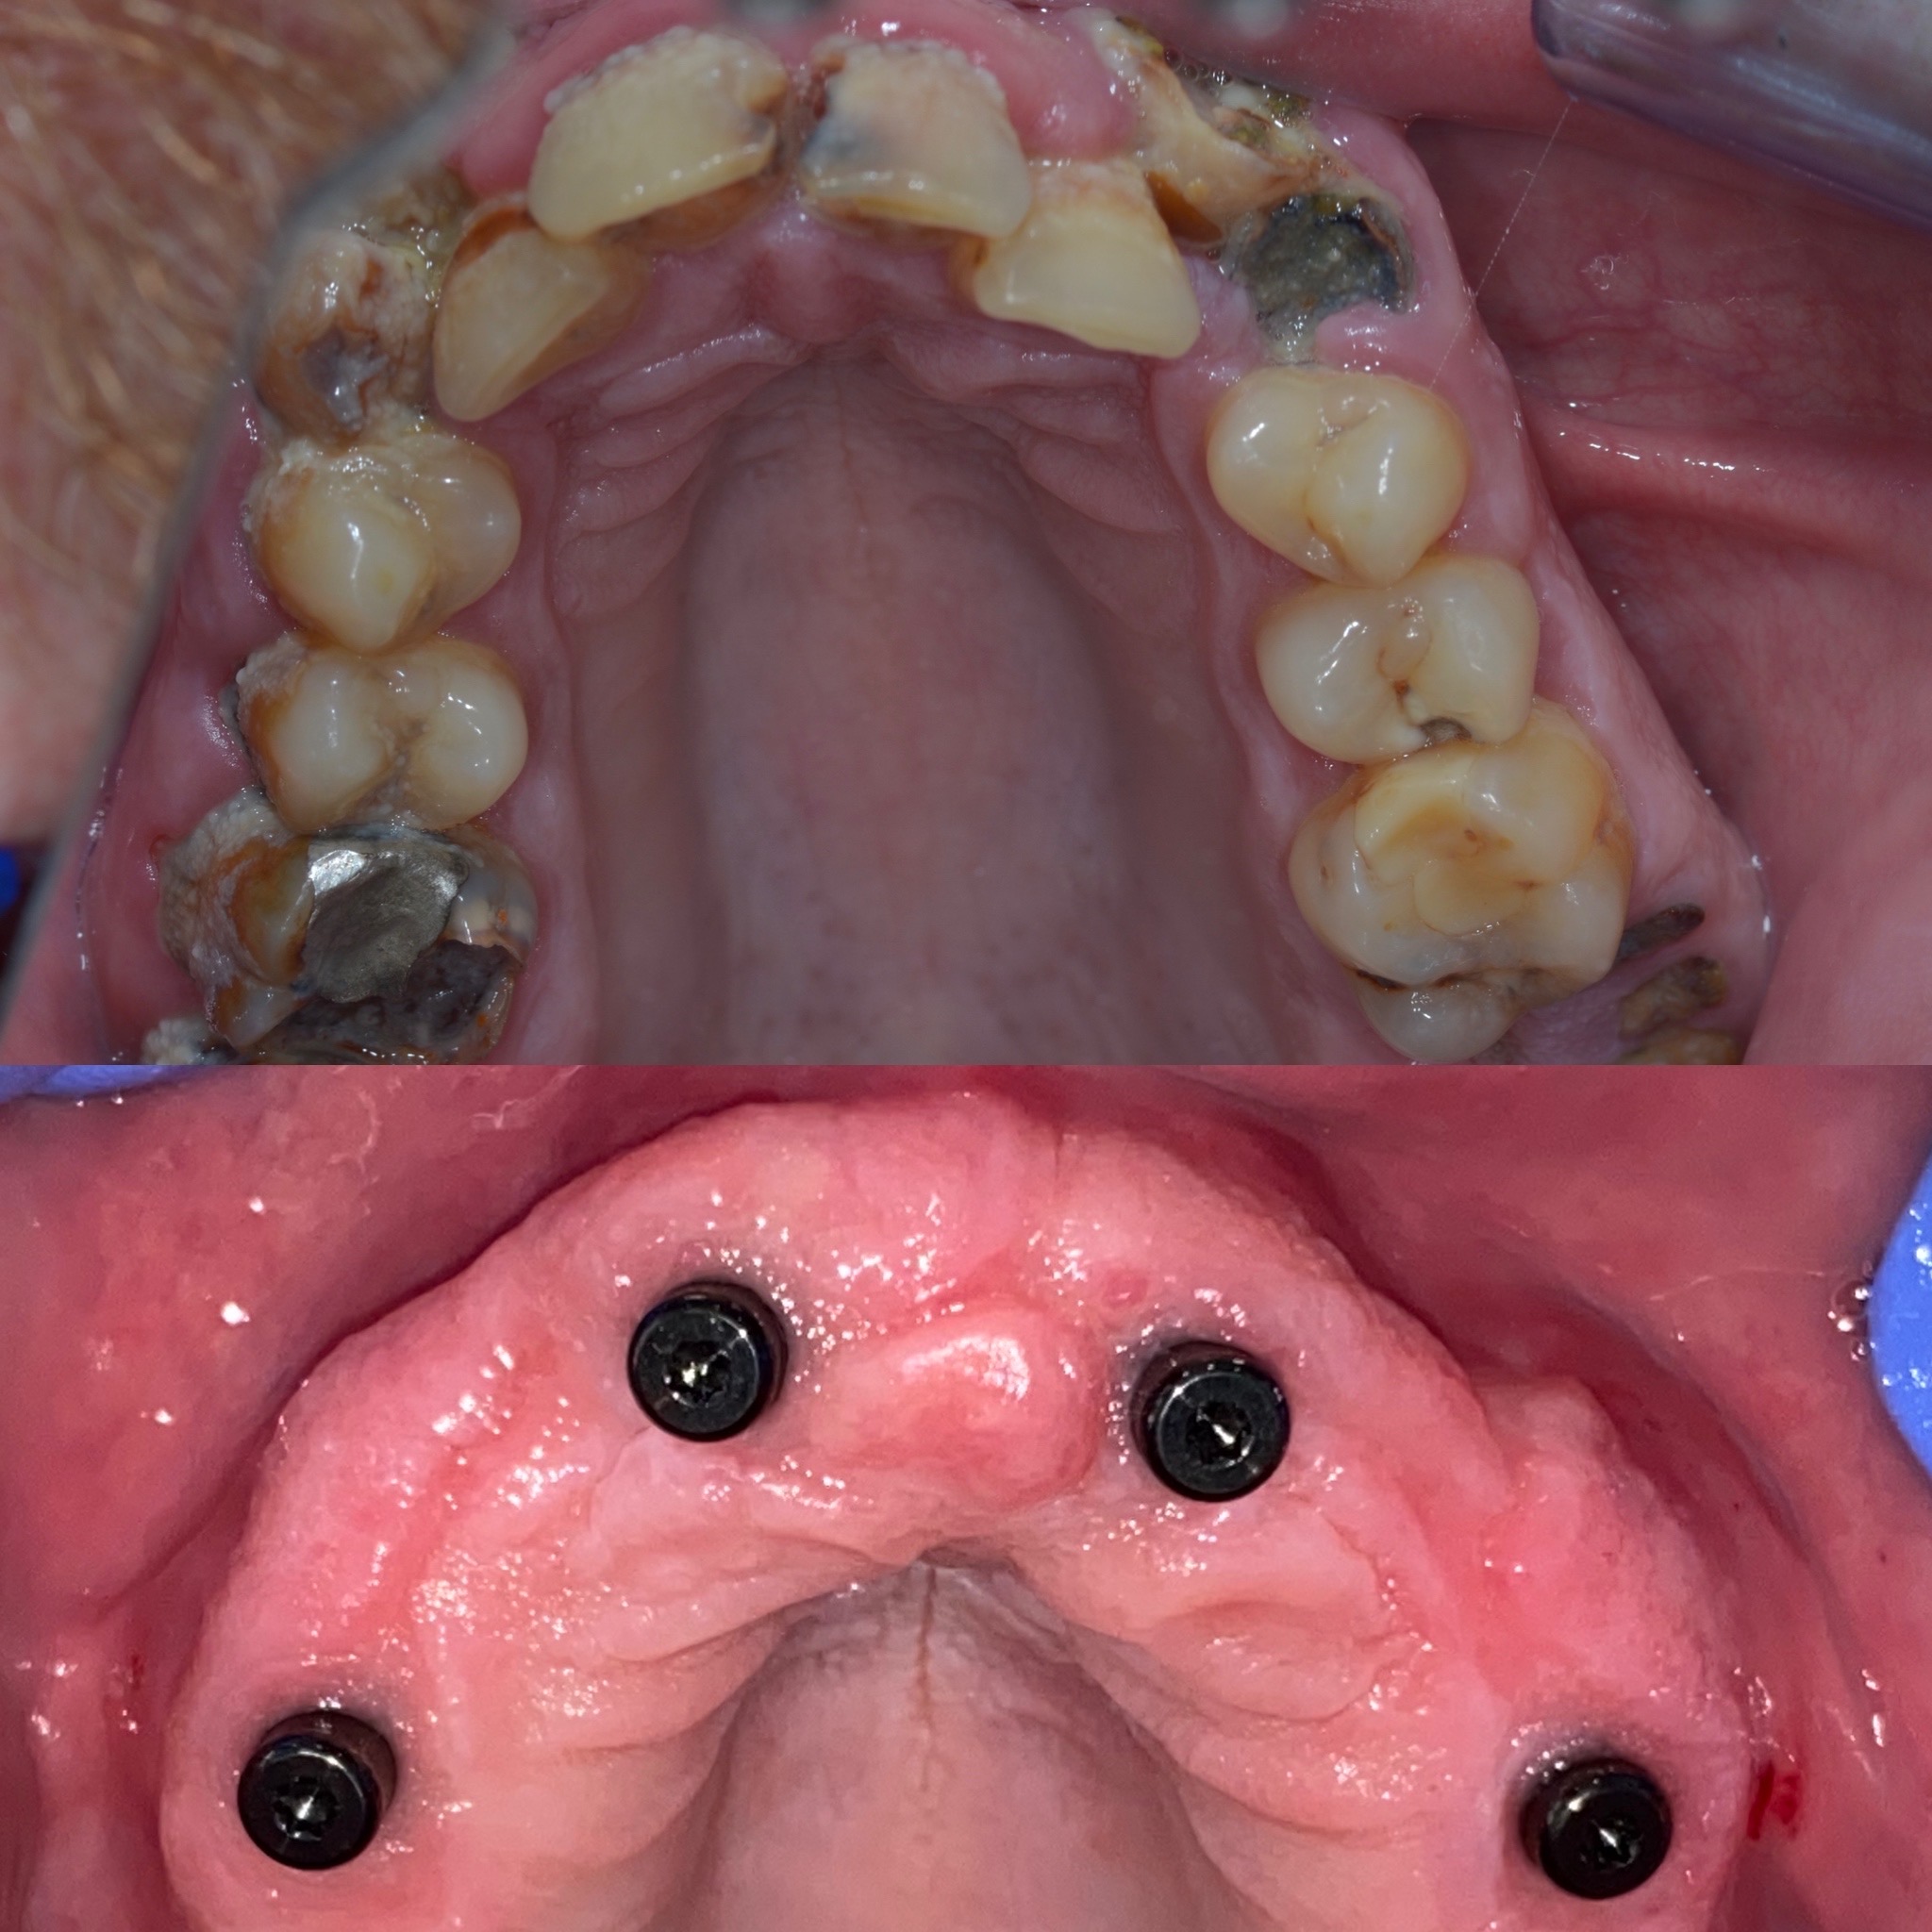 Dental Implant Case 53